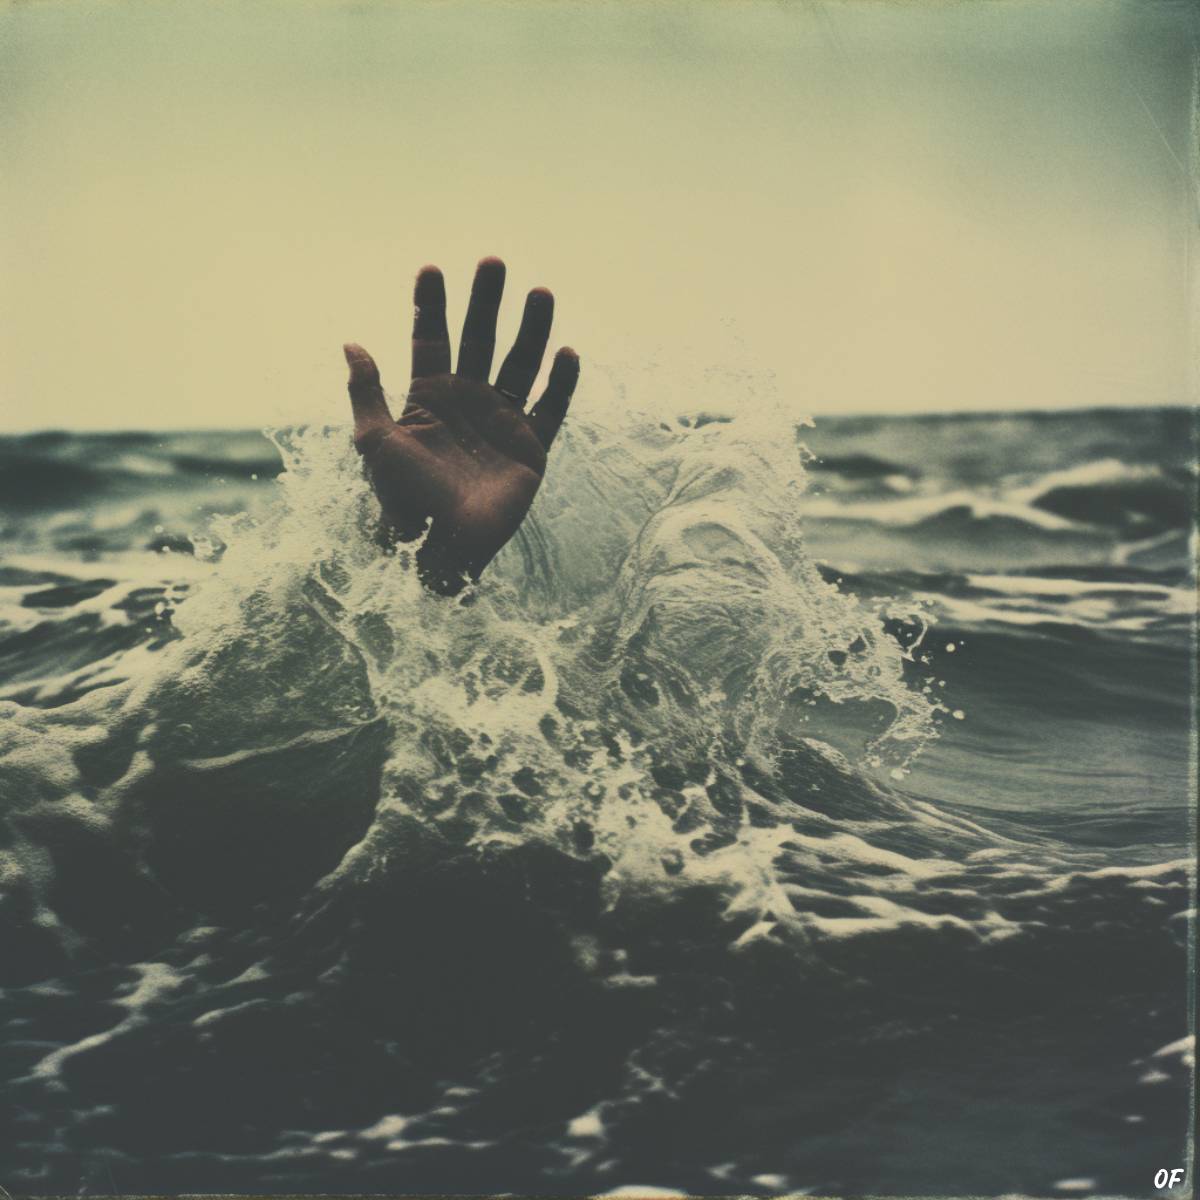 A desperate hand breaking through the ocean waves.